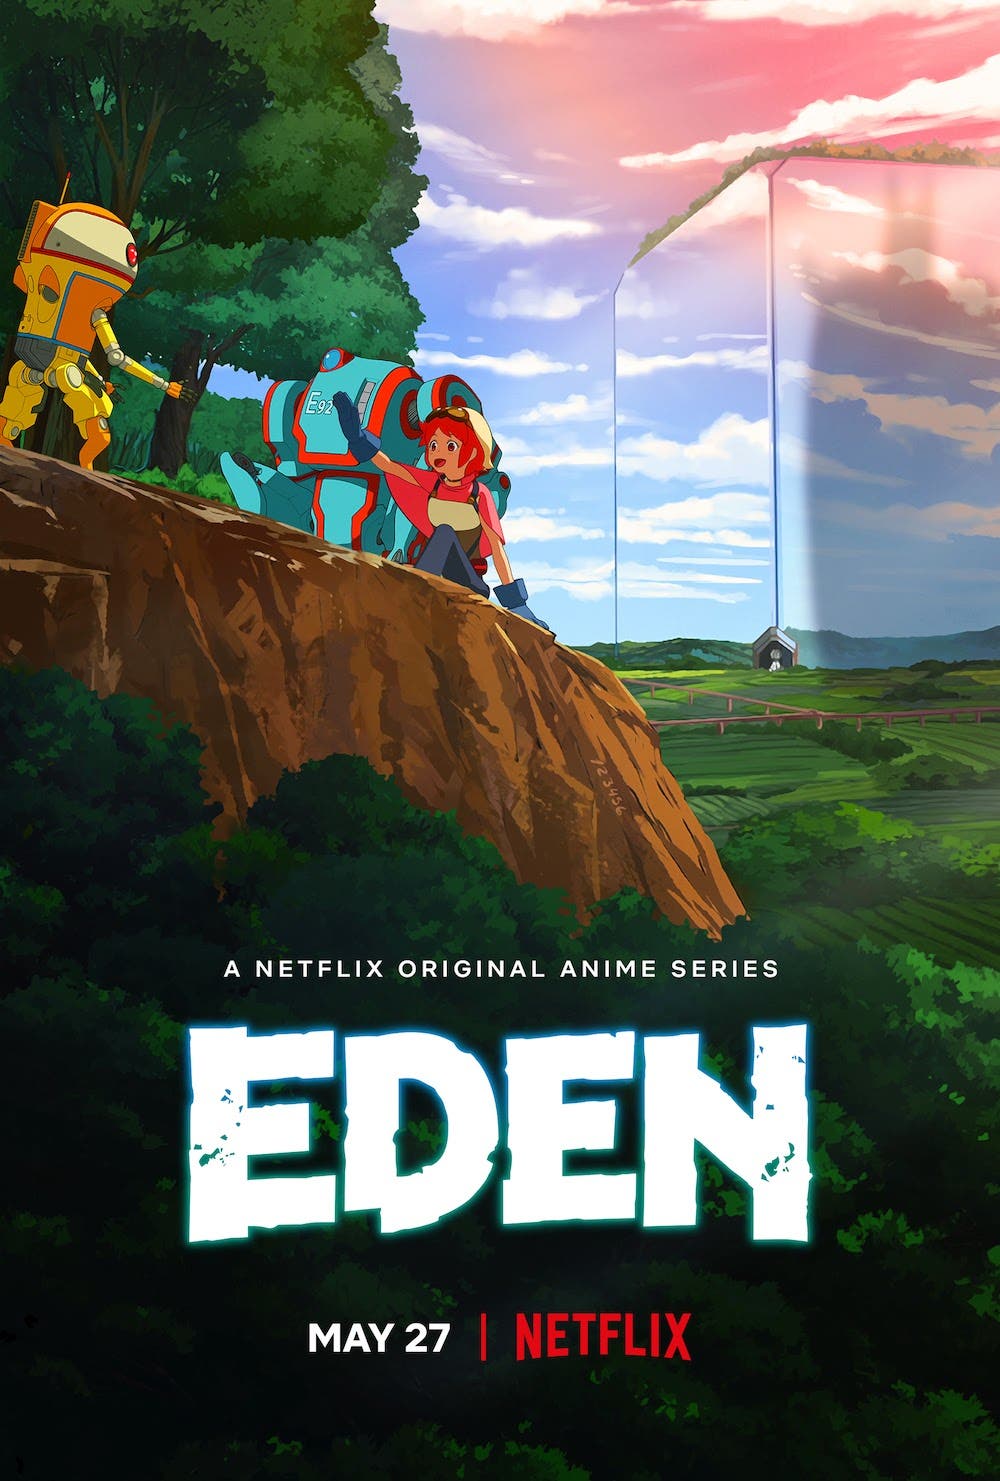 Anime Eden Of The East HD Wallpaper